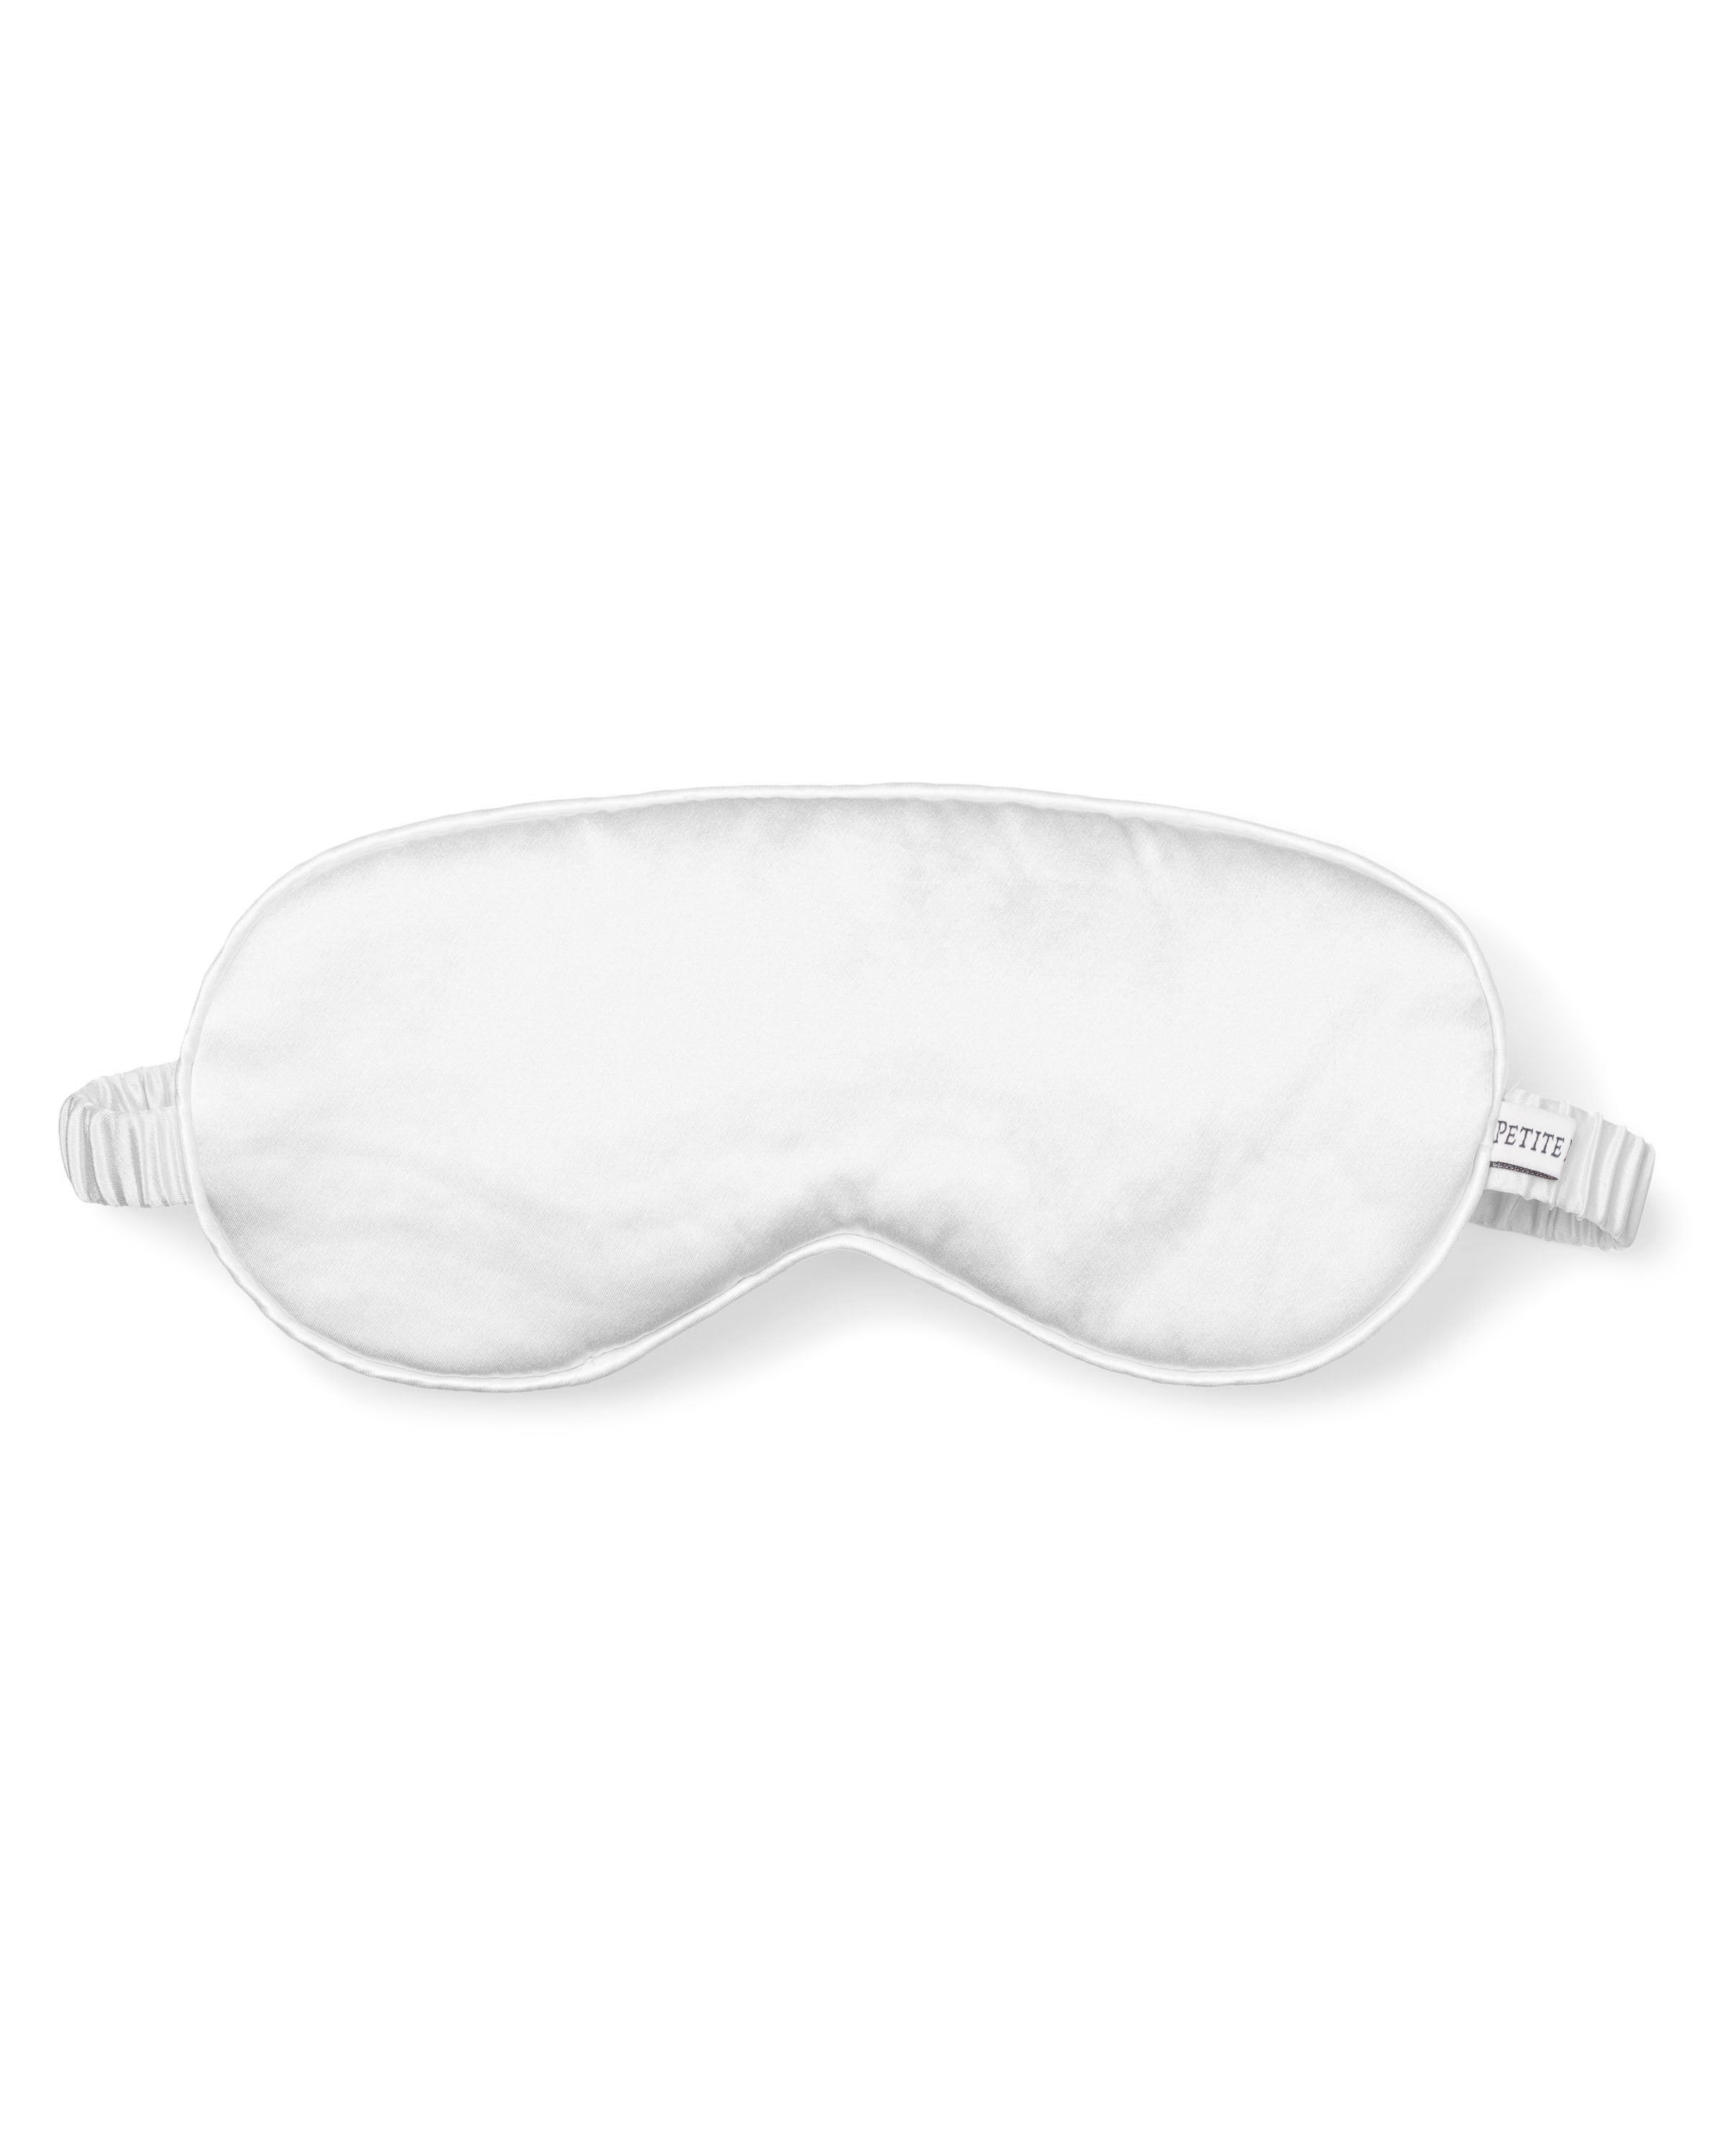 Women's Silk Sleep Mask in White – Petite Plume